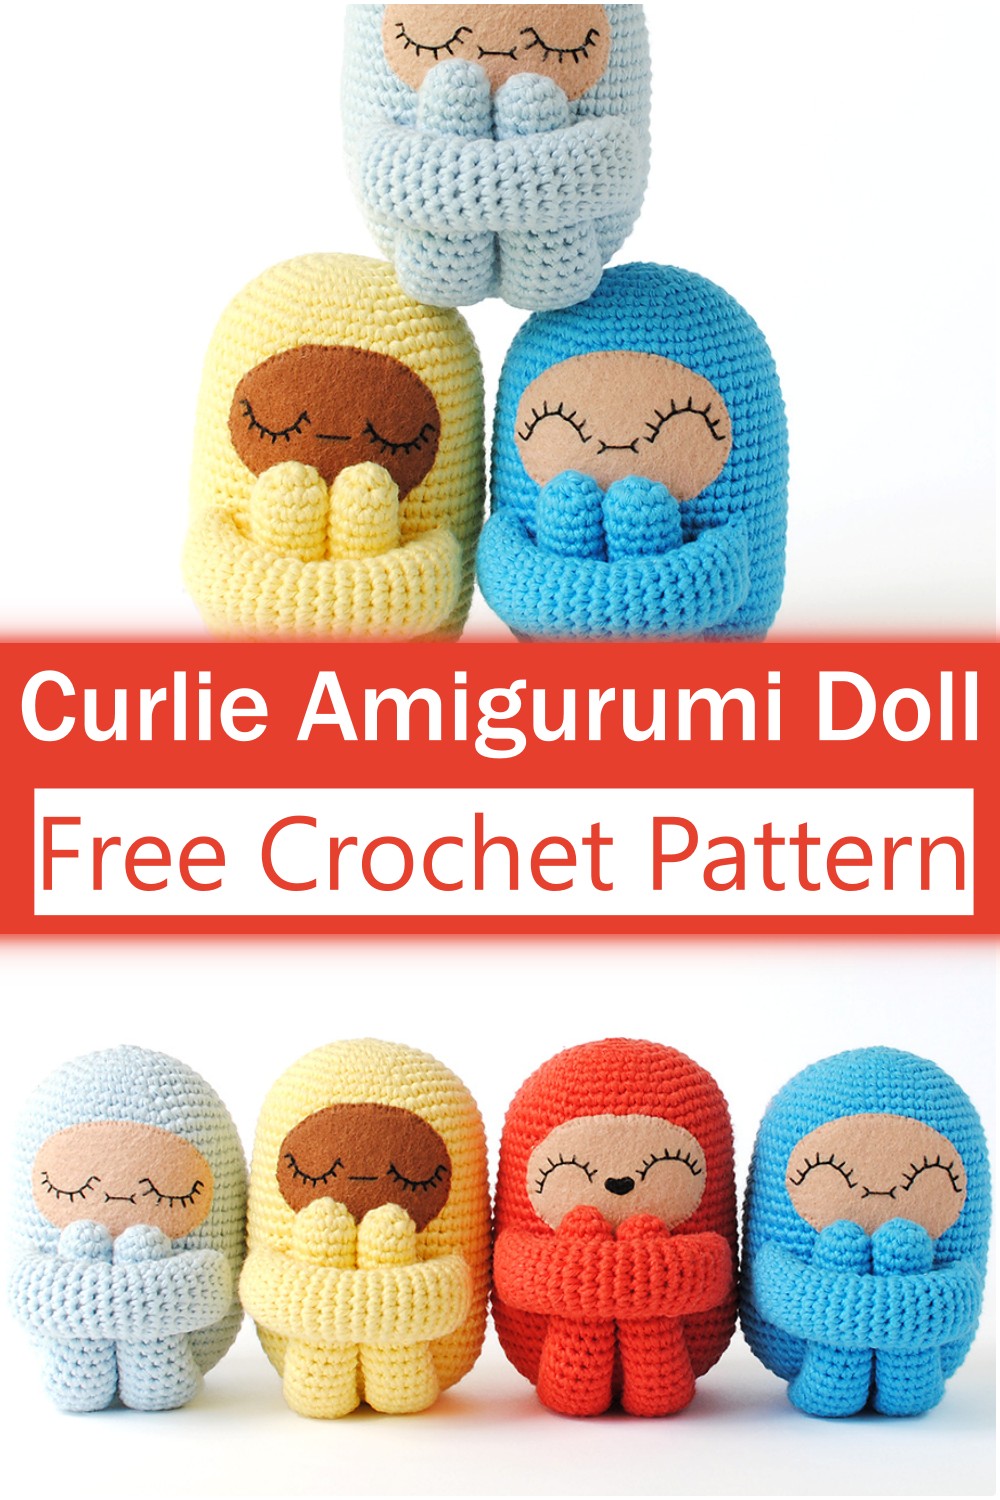 Crochet Curlie Amigurumi Doll